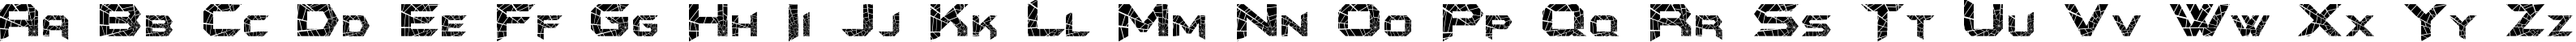 Пример написания английского алфавита шрифтом FK Batman Shatter.kz